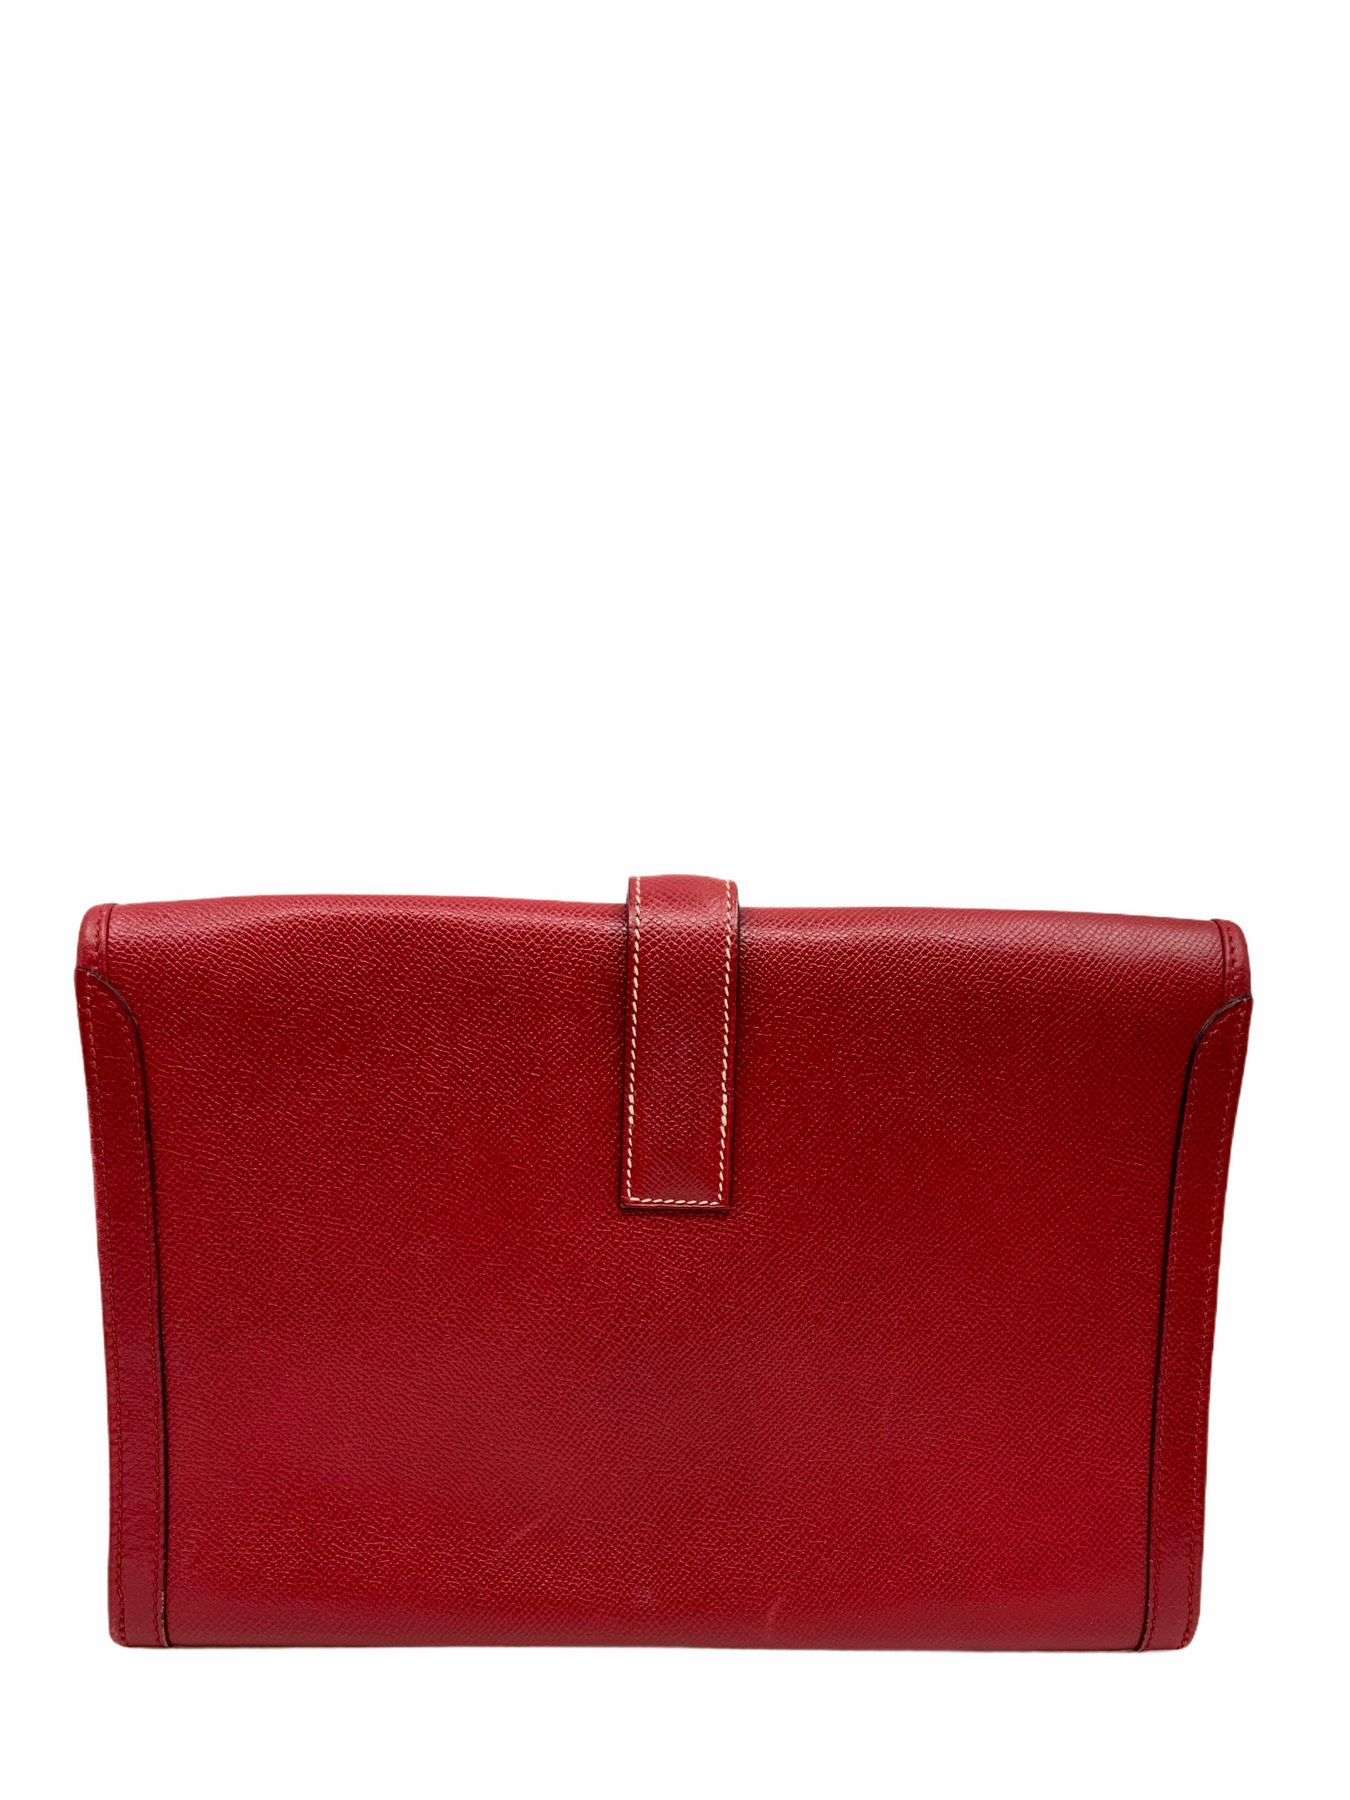 Hermes Jige Elan Clutch Epsom Leather In Red